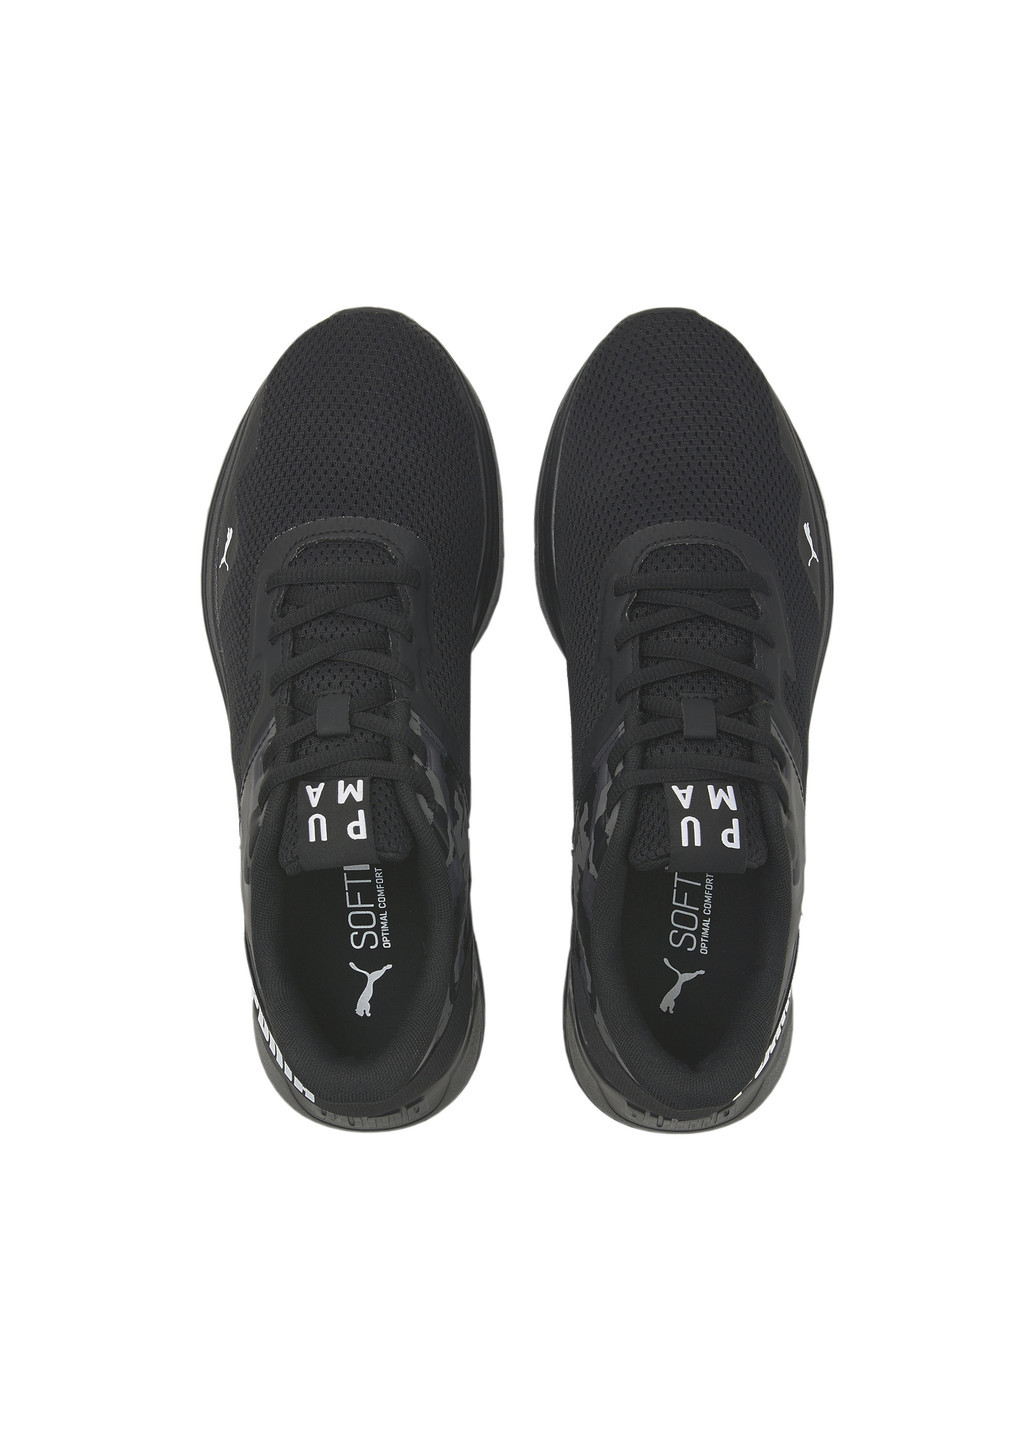 Чорні всесезон кросівки disperse xt 2 outdoor camo men's training shoes Puma